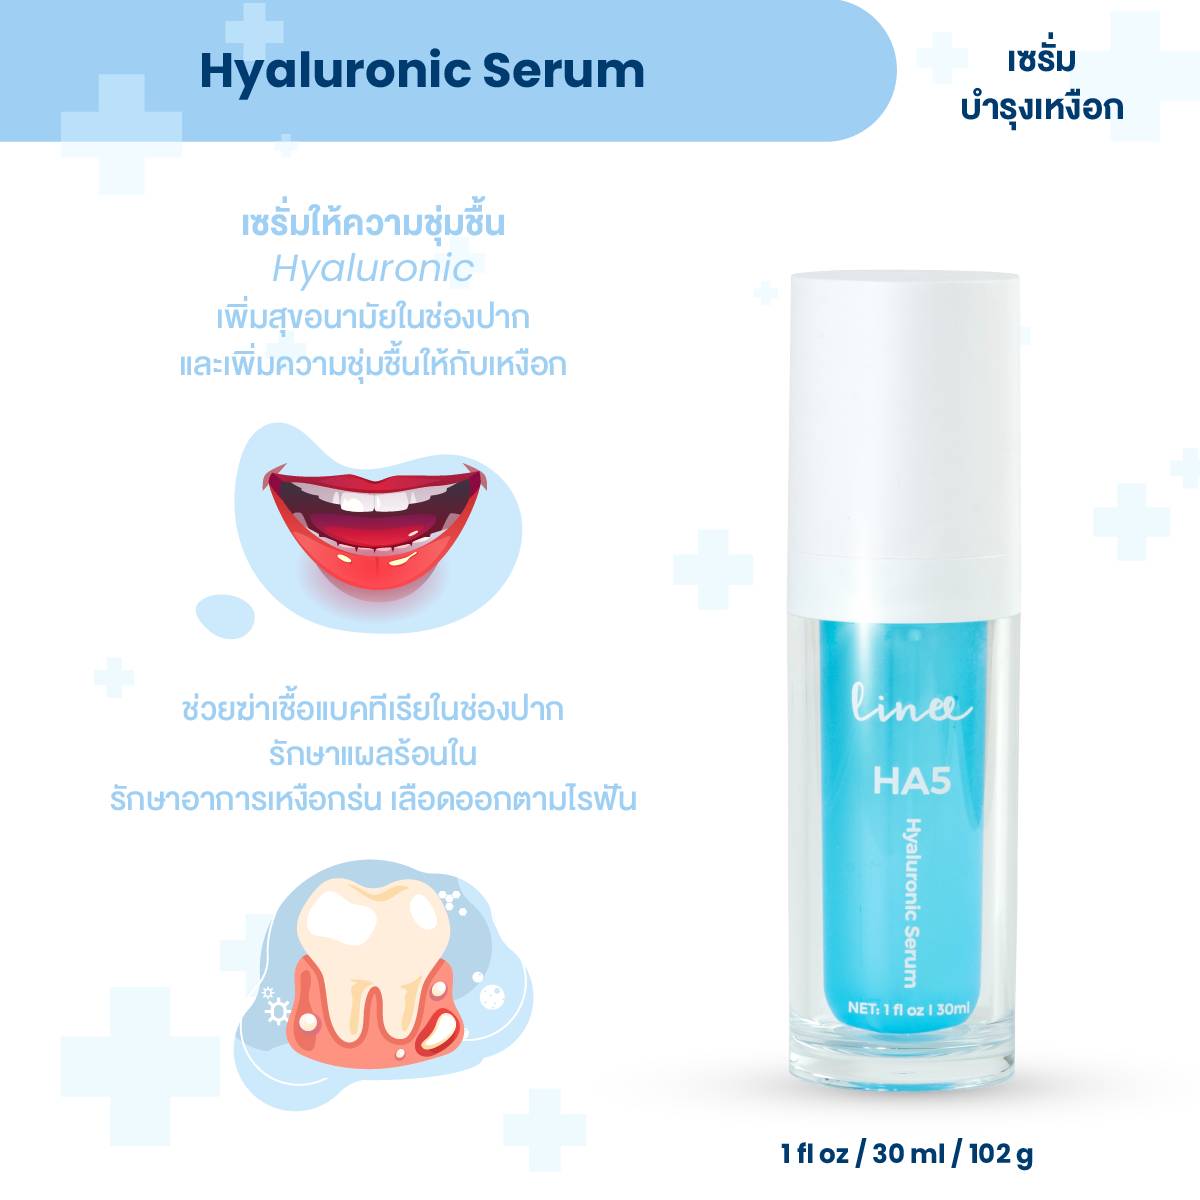 Linee HA5 Hyaluronice Serum สูตรควบคุมความชราในช่องปาก เช่น เหงือกร่น หรือโรคเหงือกต่างๆ (ขวดสีฟ้า 1 ขวด)